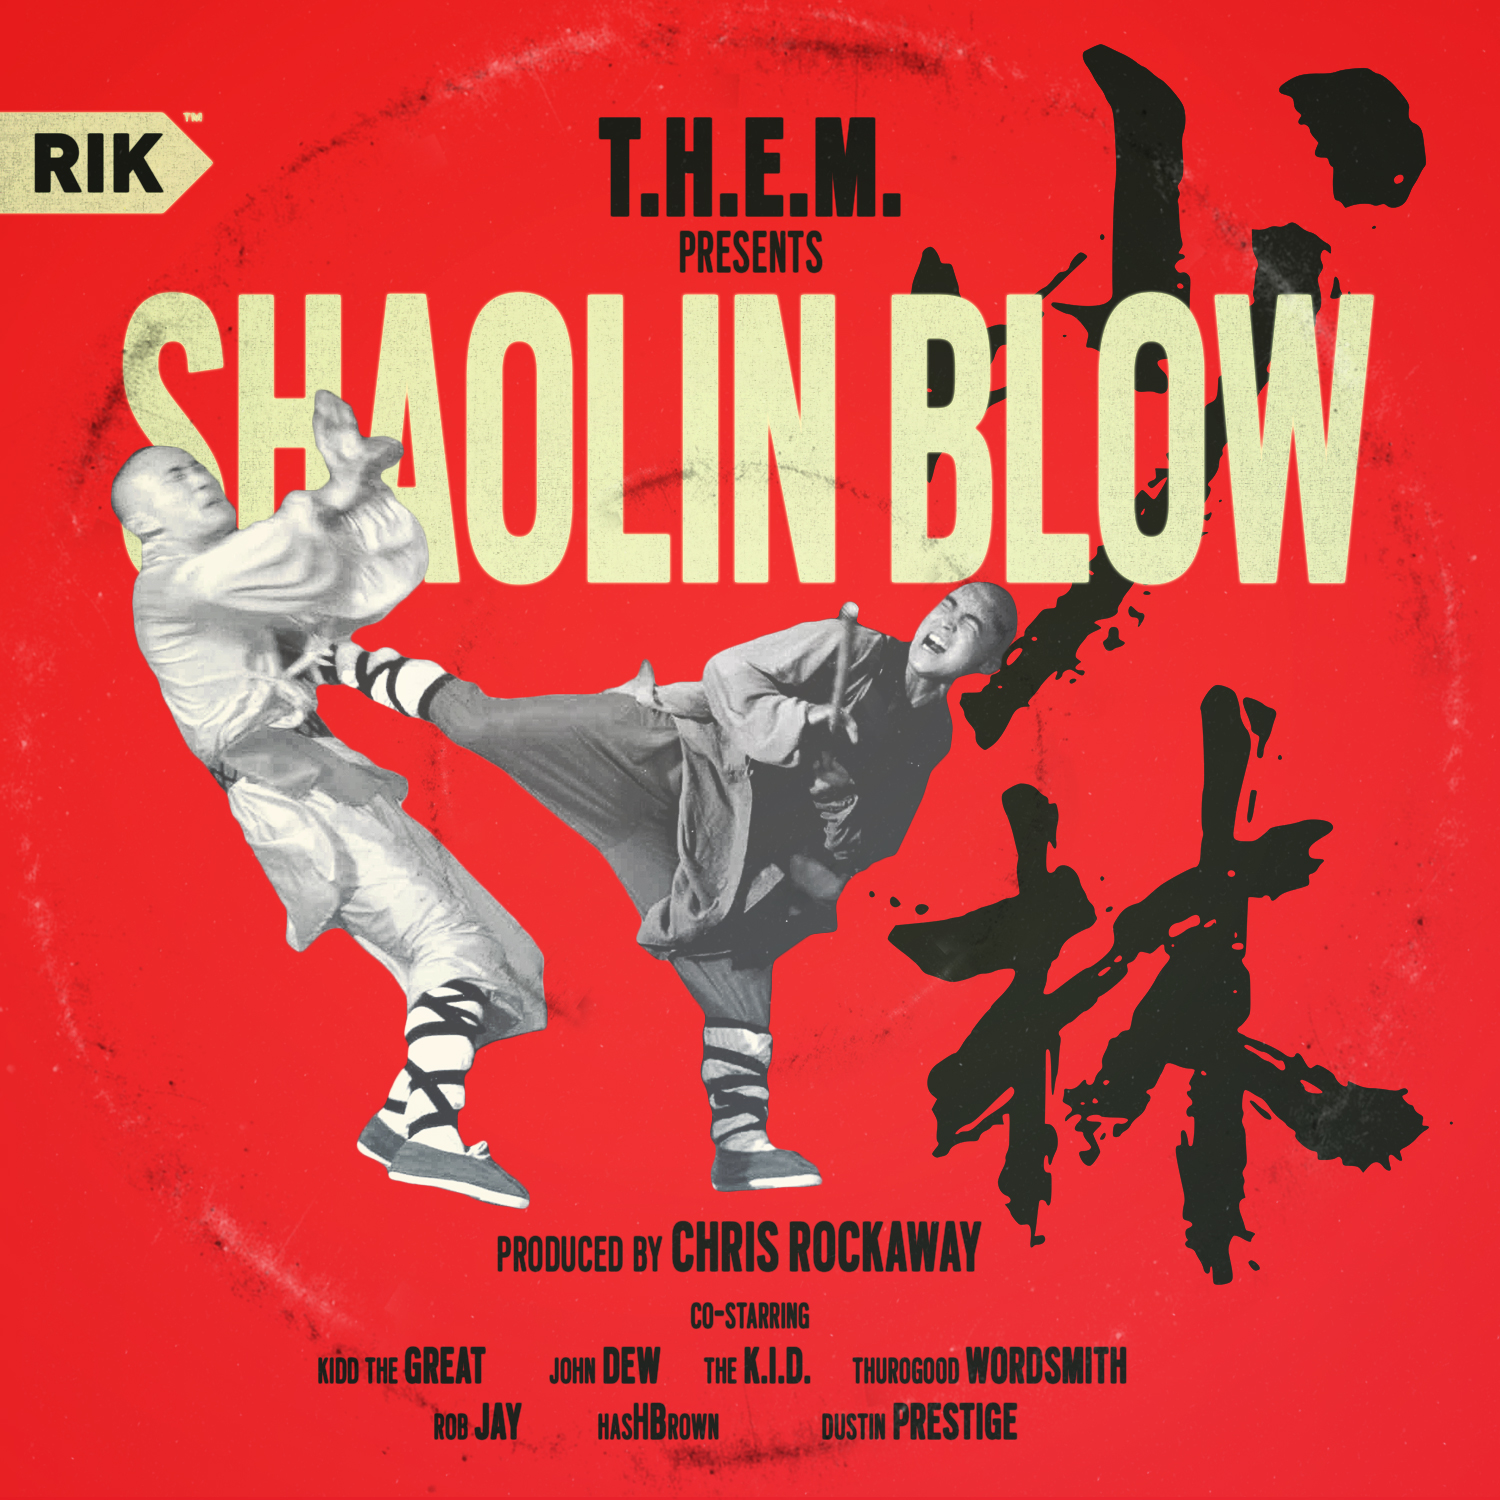 T.H.E.M. — “Shaolin Blow” (dir. OG Danny Ocean) Video + Single